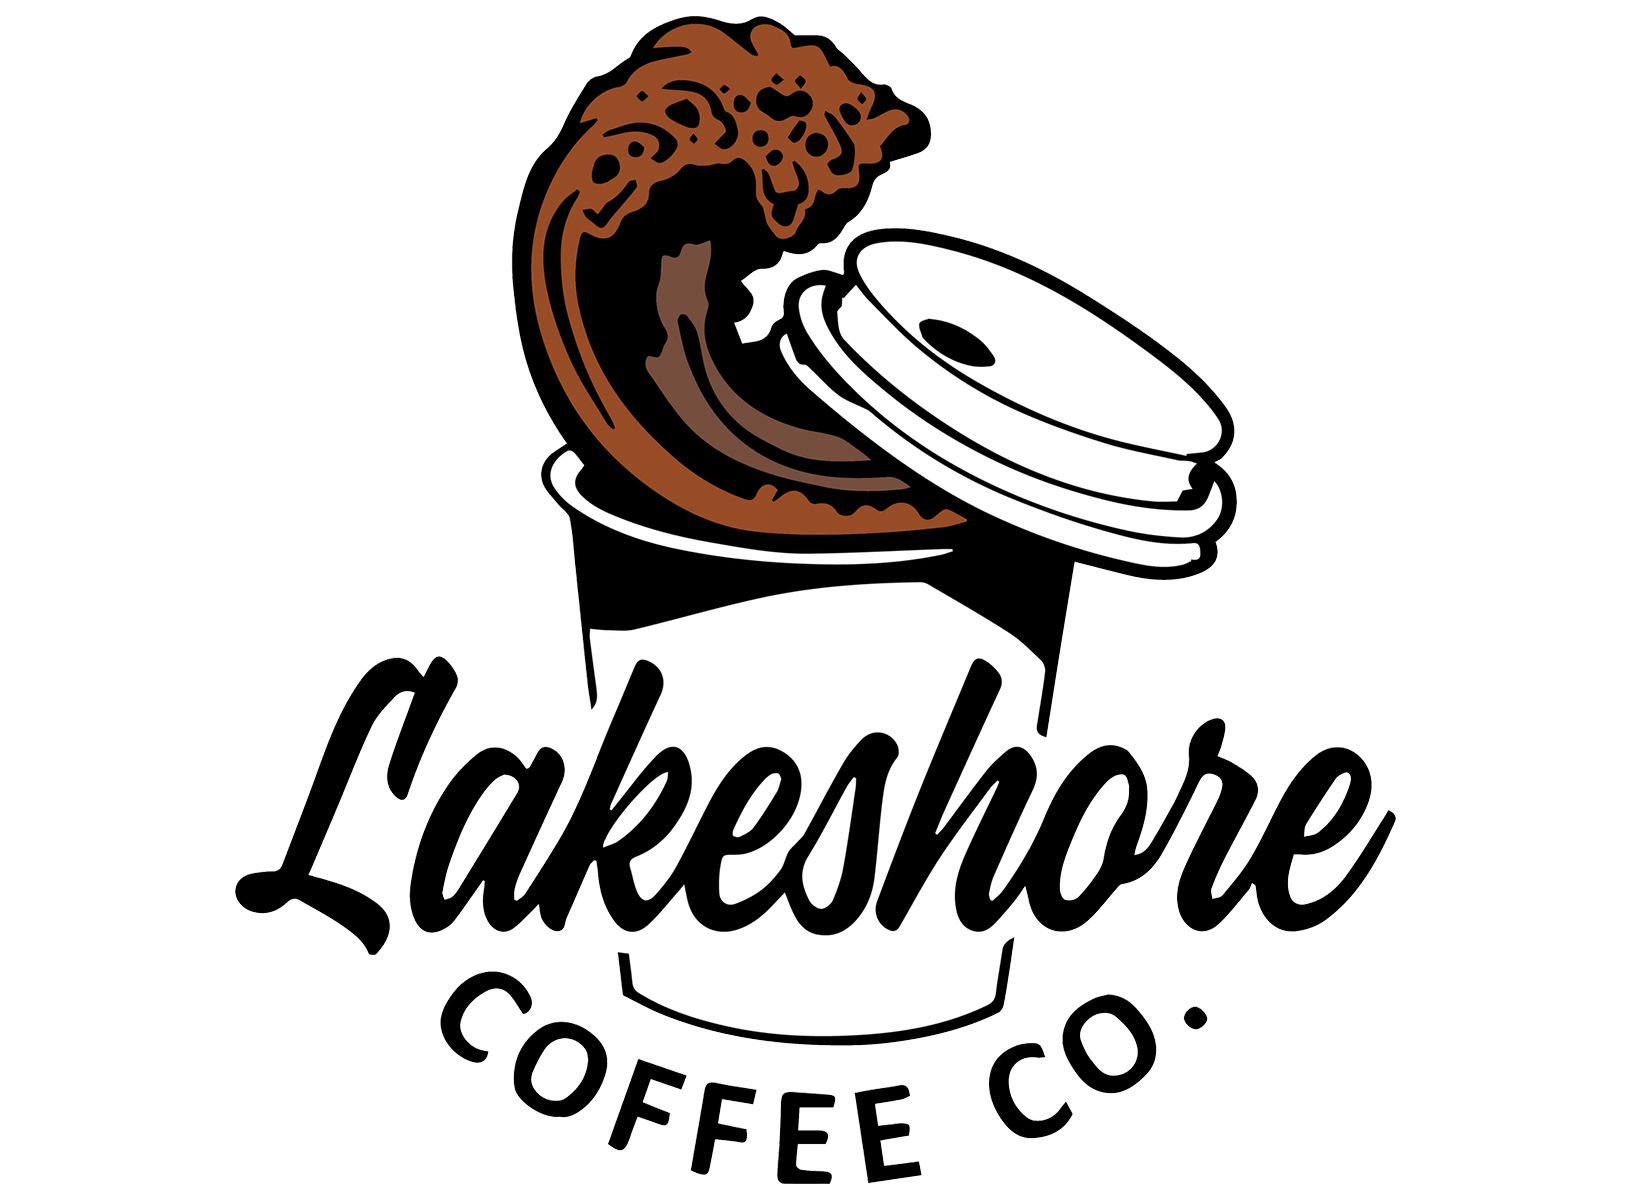 lakeshore coffee
